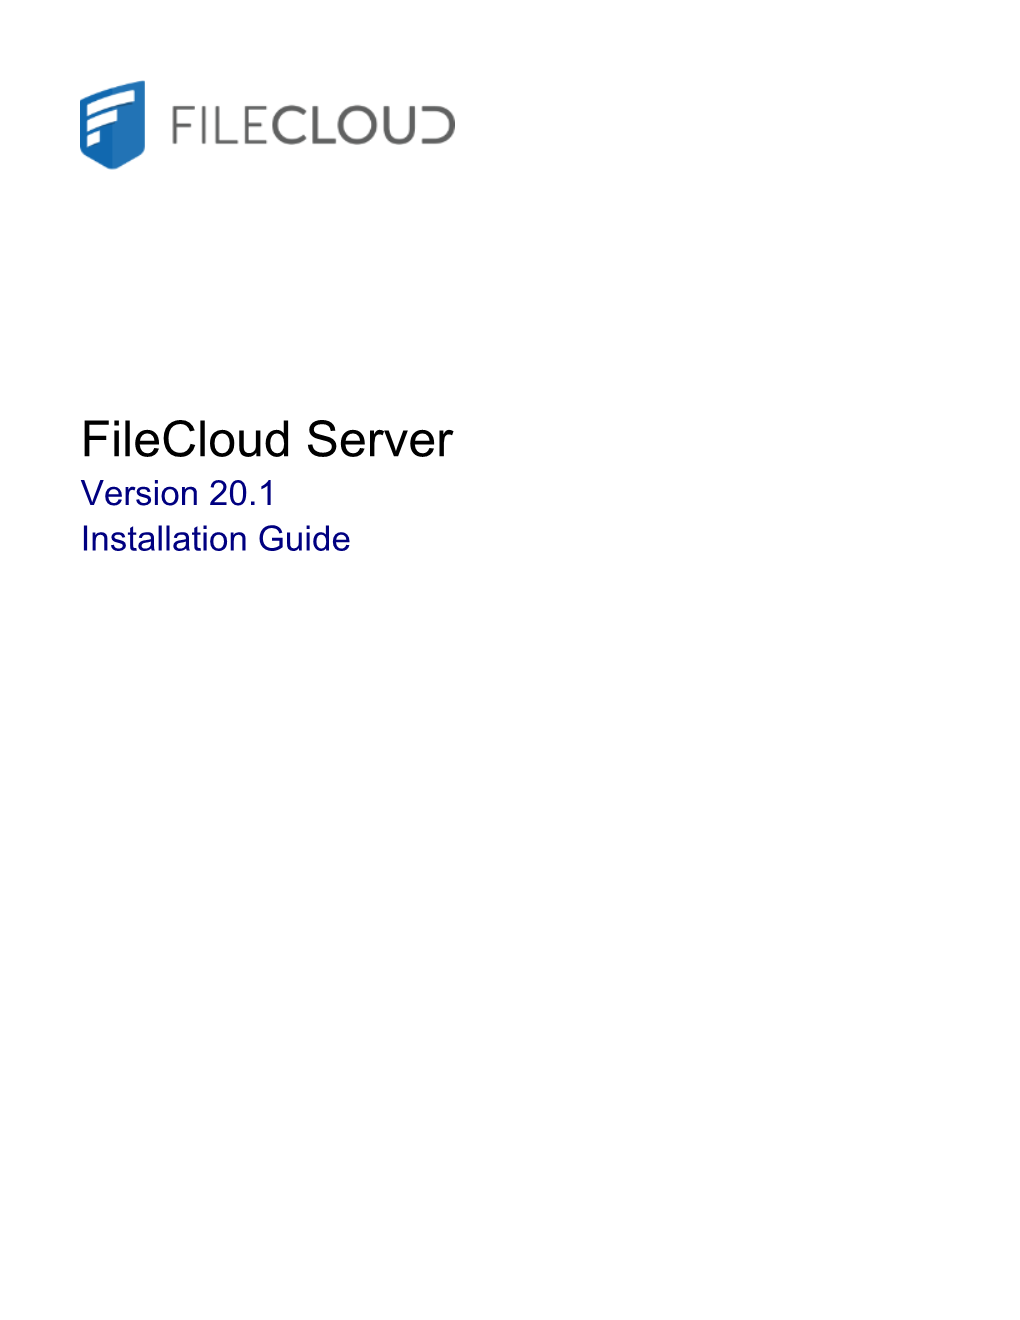 Filecloud Server Version 20.1 Installation Guide Filecloud Server Version 20.1 Installation Guide